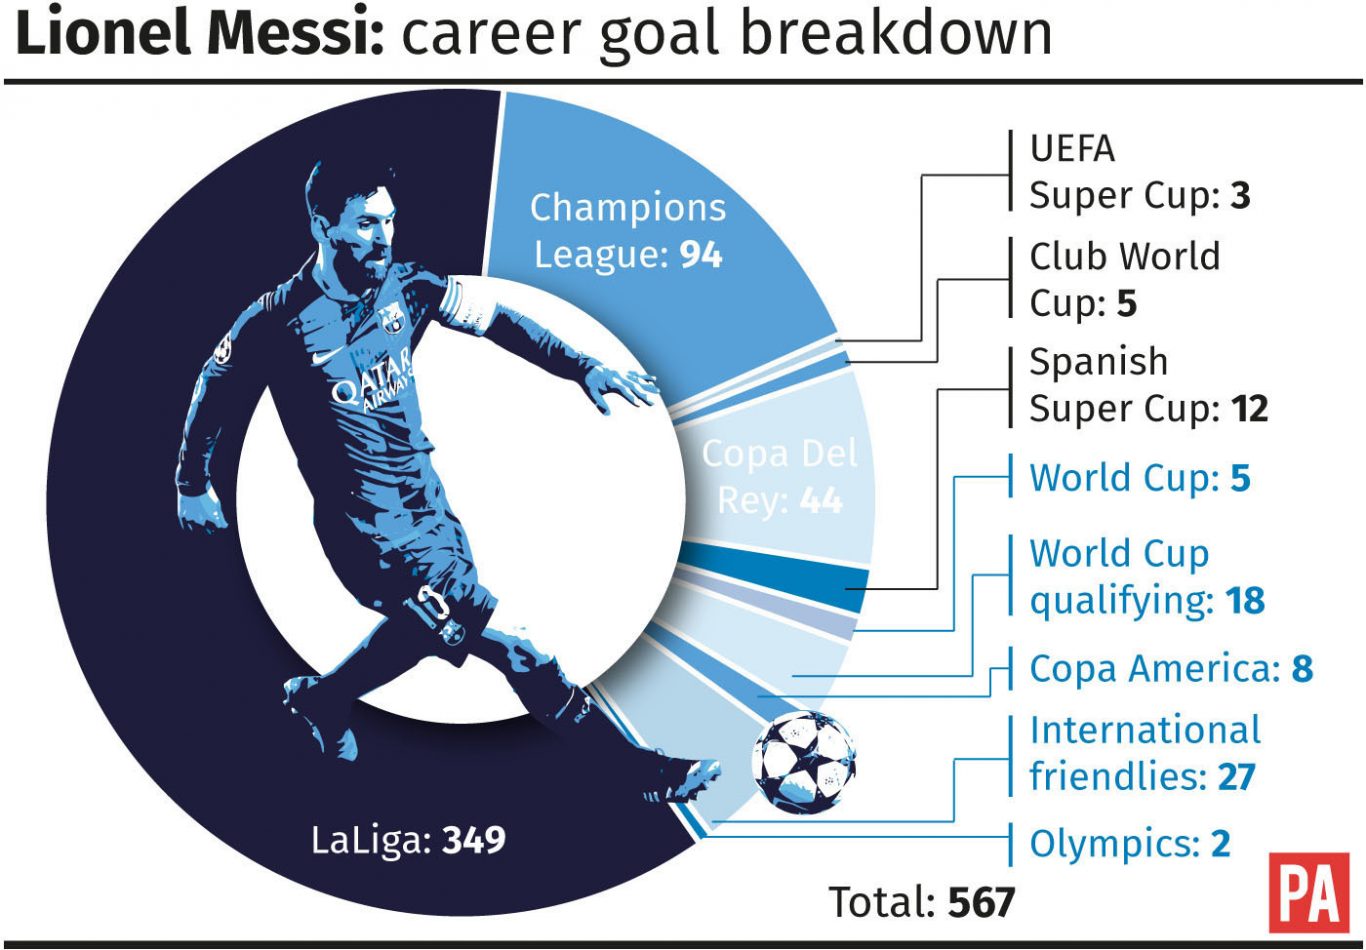 Lionel Messi: career goal breakdown graphic